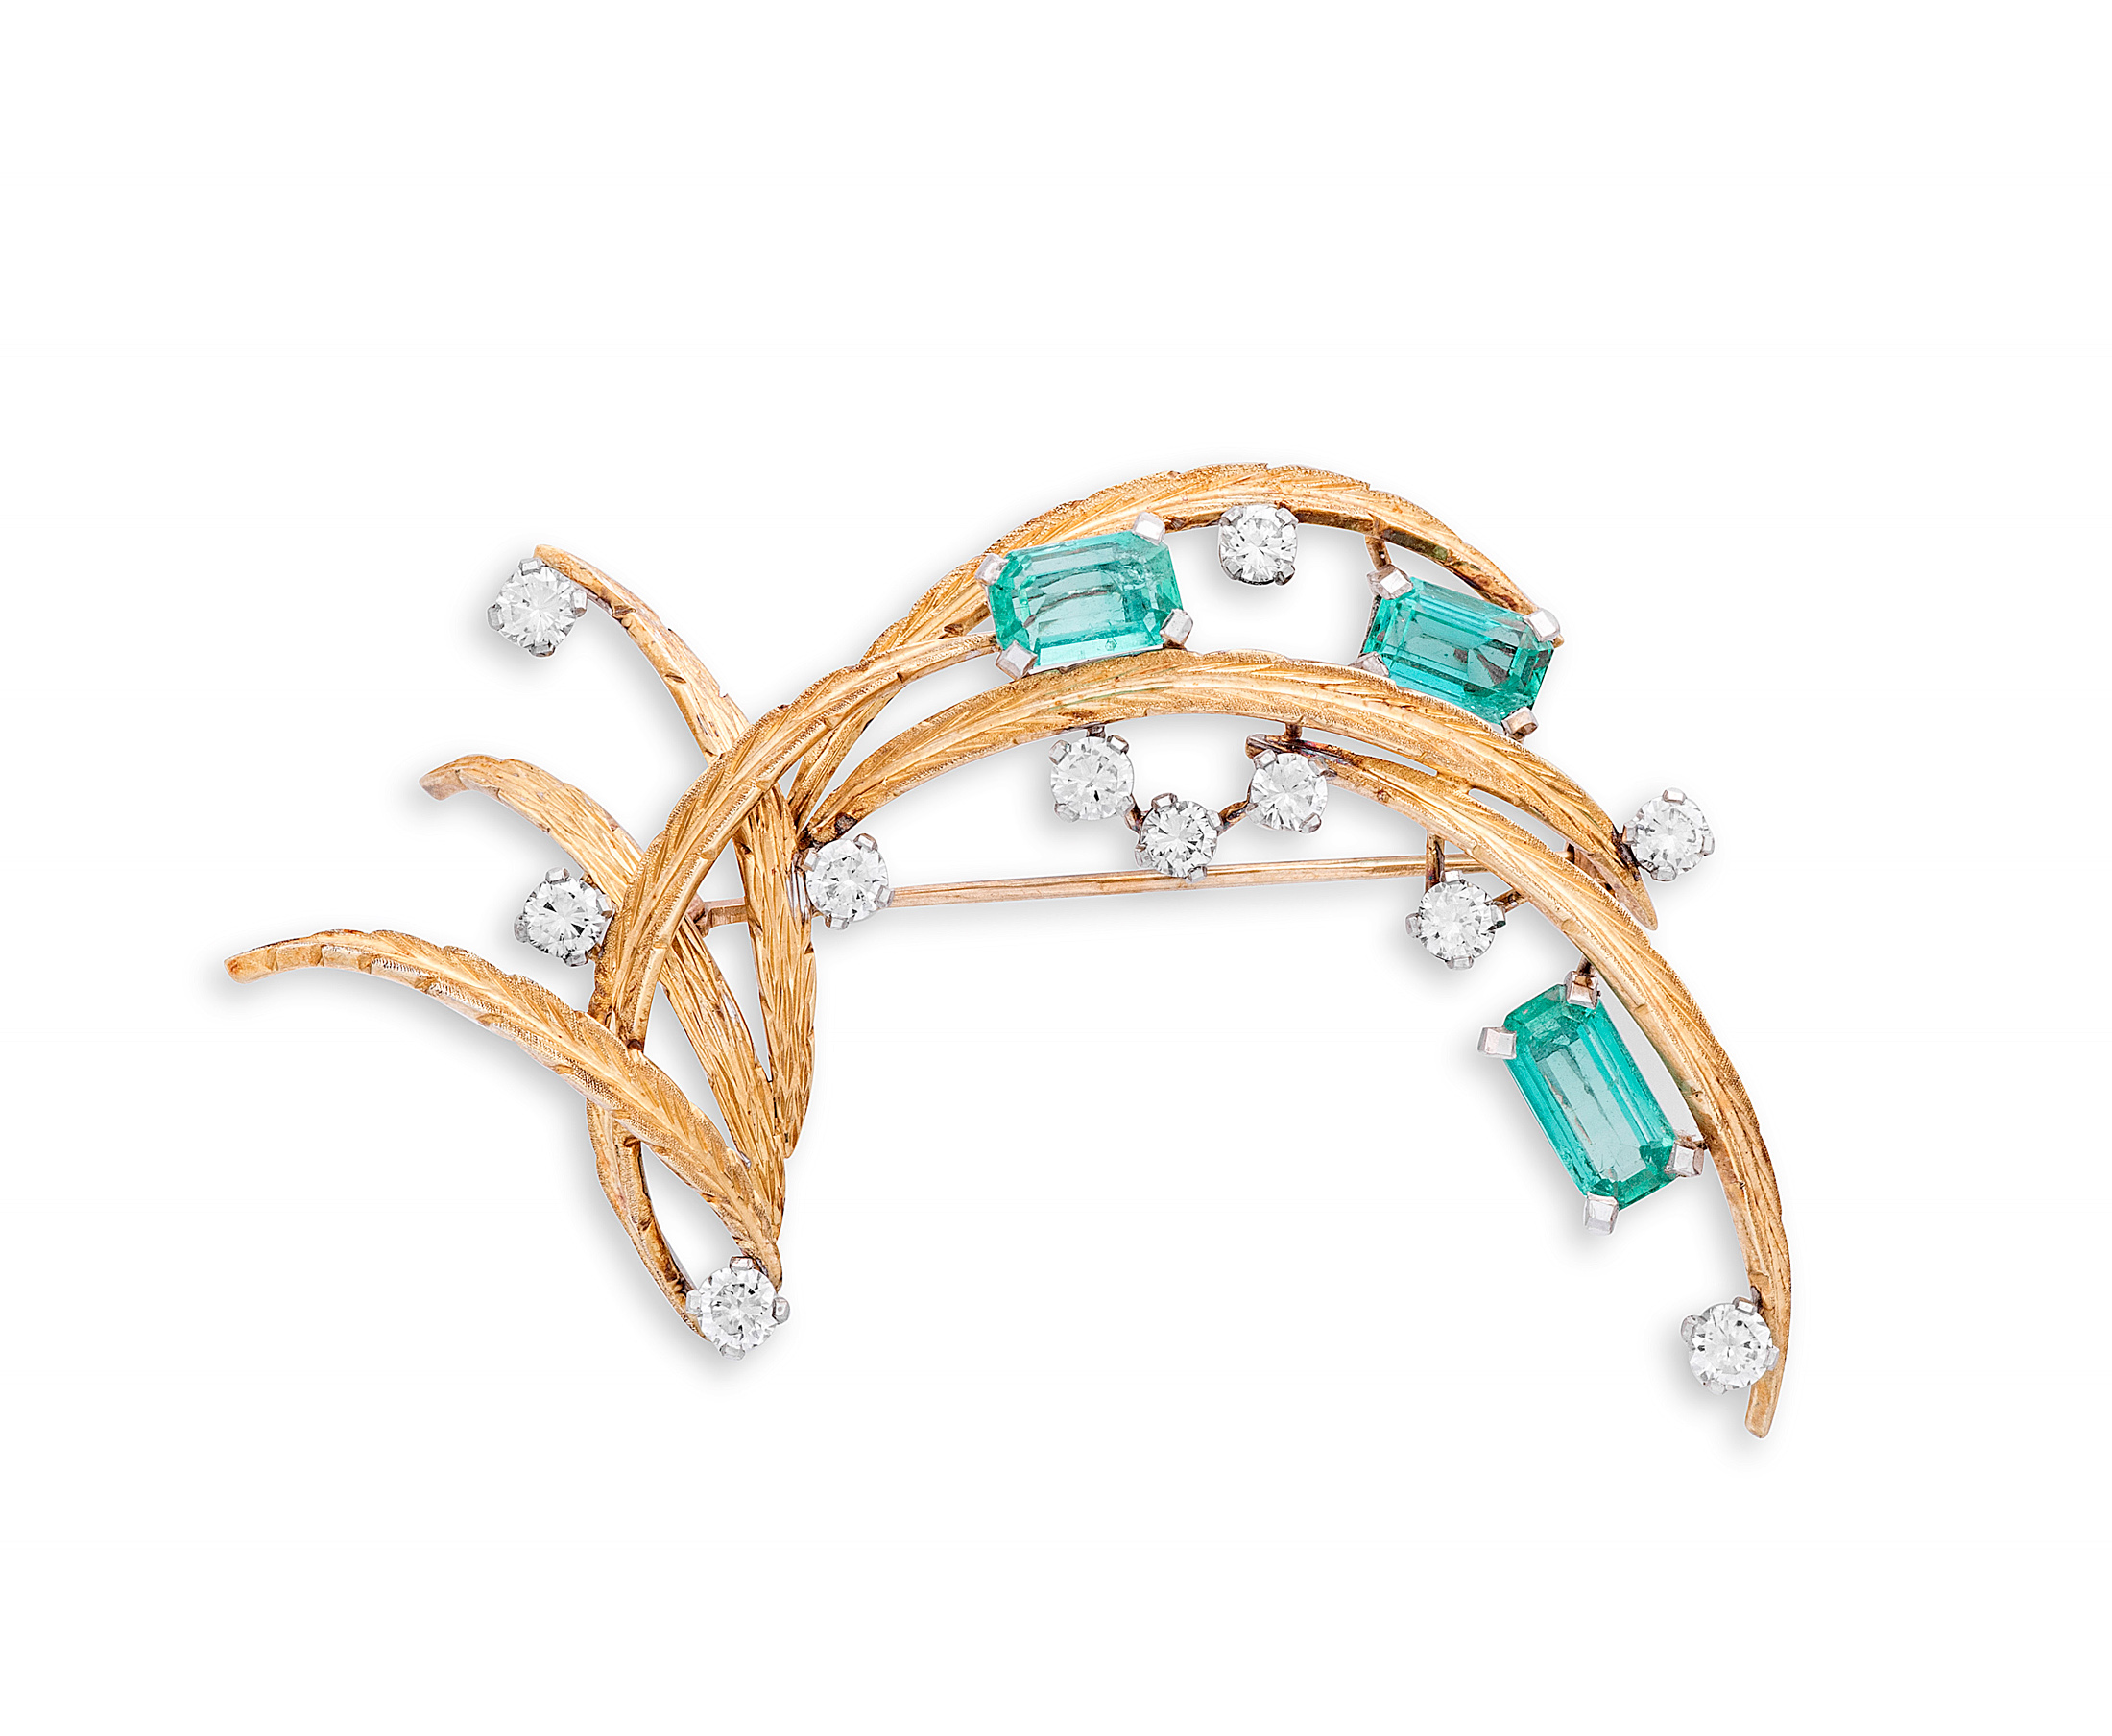 Emerald, diamond and gold brooch